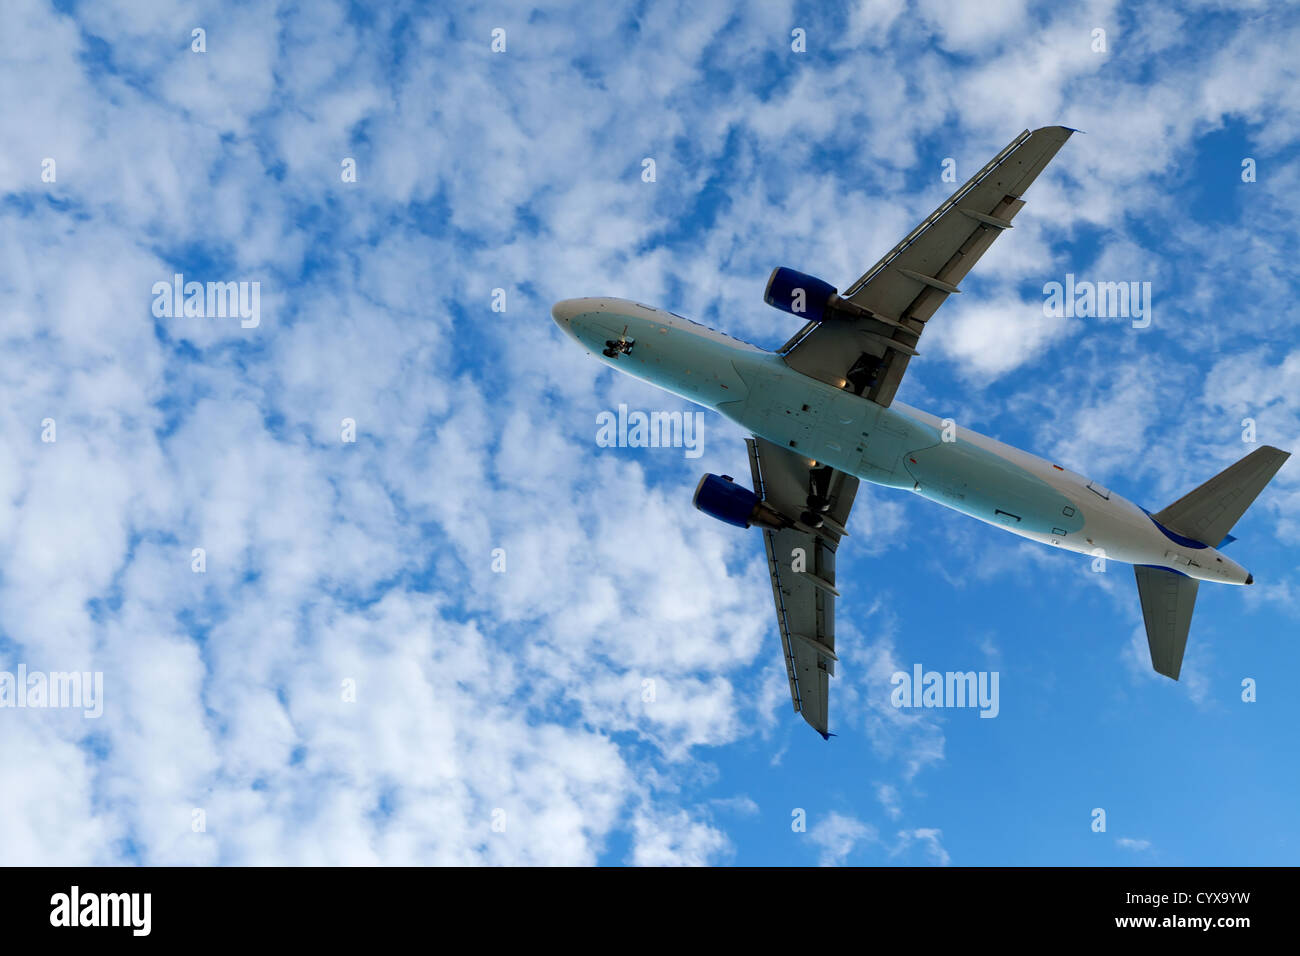 Самолет снизу. Самолет в небе вид снизу. Самолет в полете вид снизу. Самолет вид сверху. Фото самолета снизу.